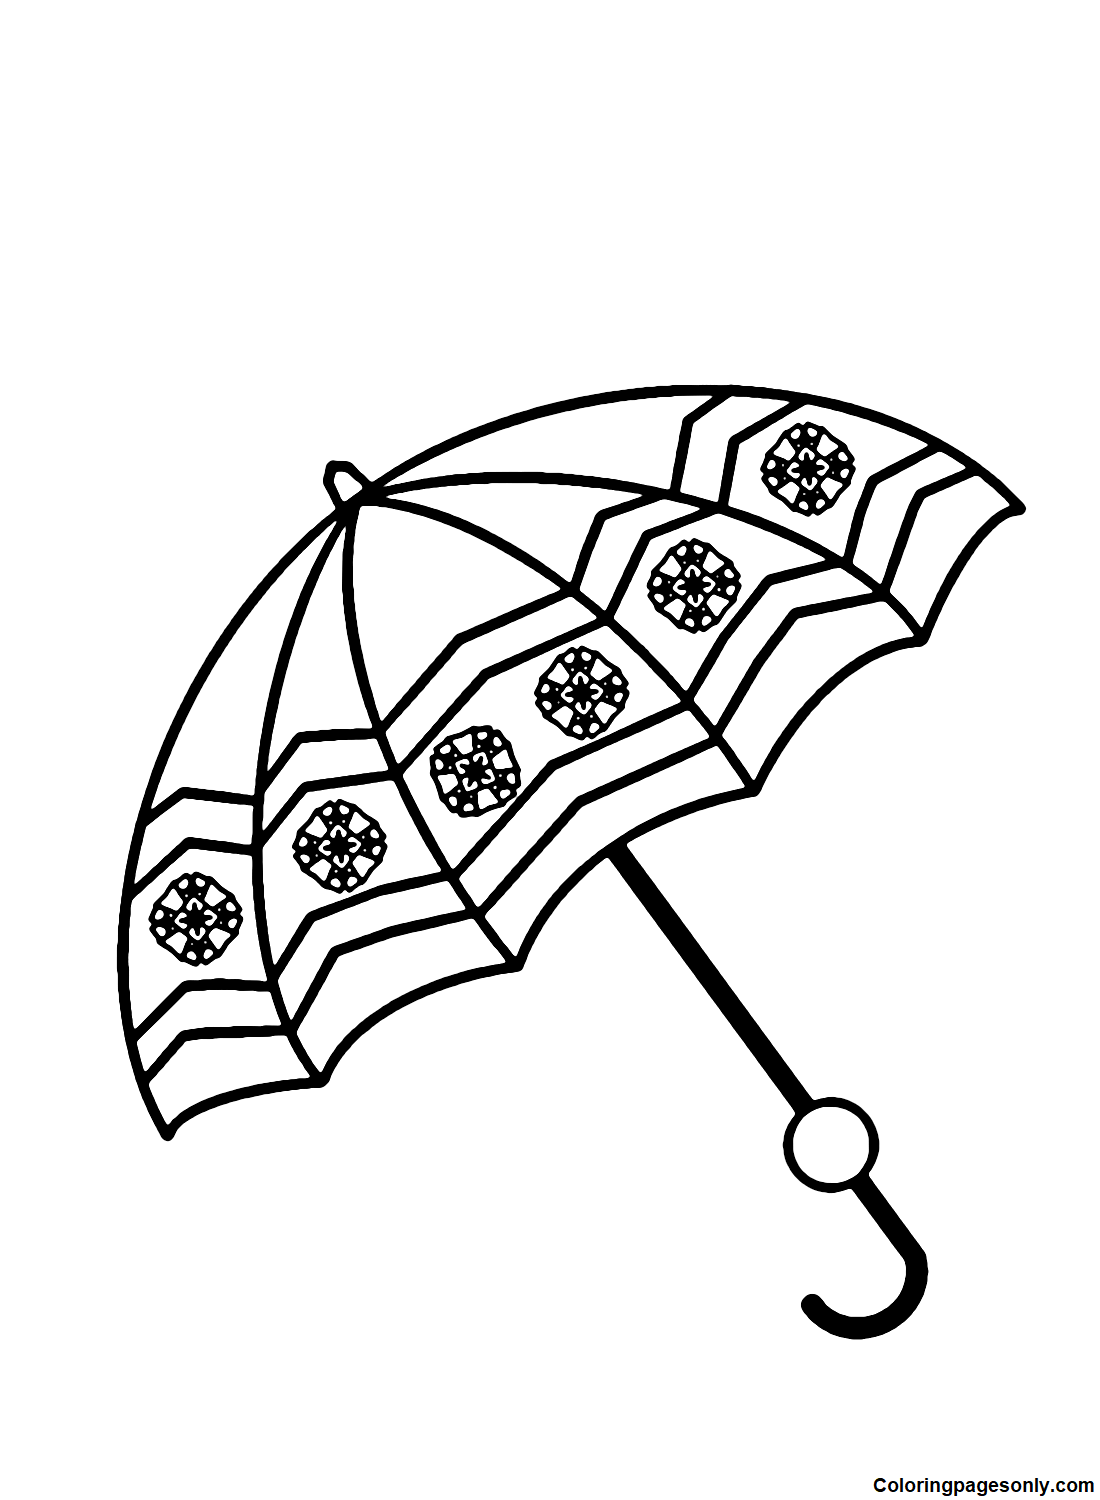 Guarda-chuva Fácil da Umbrella